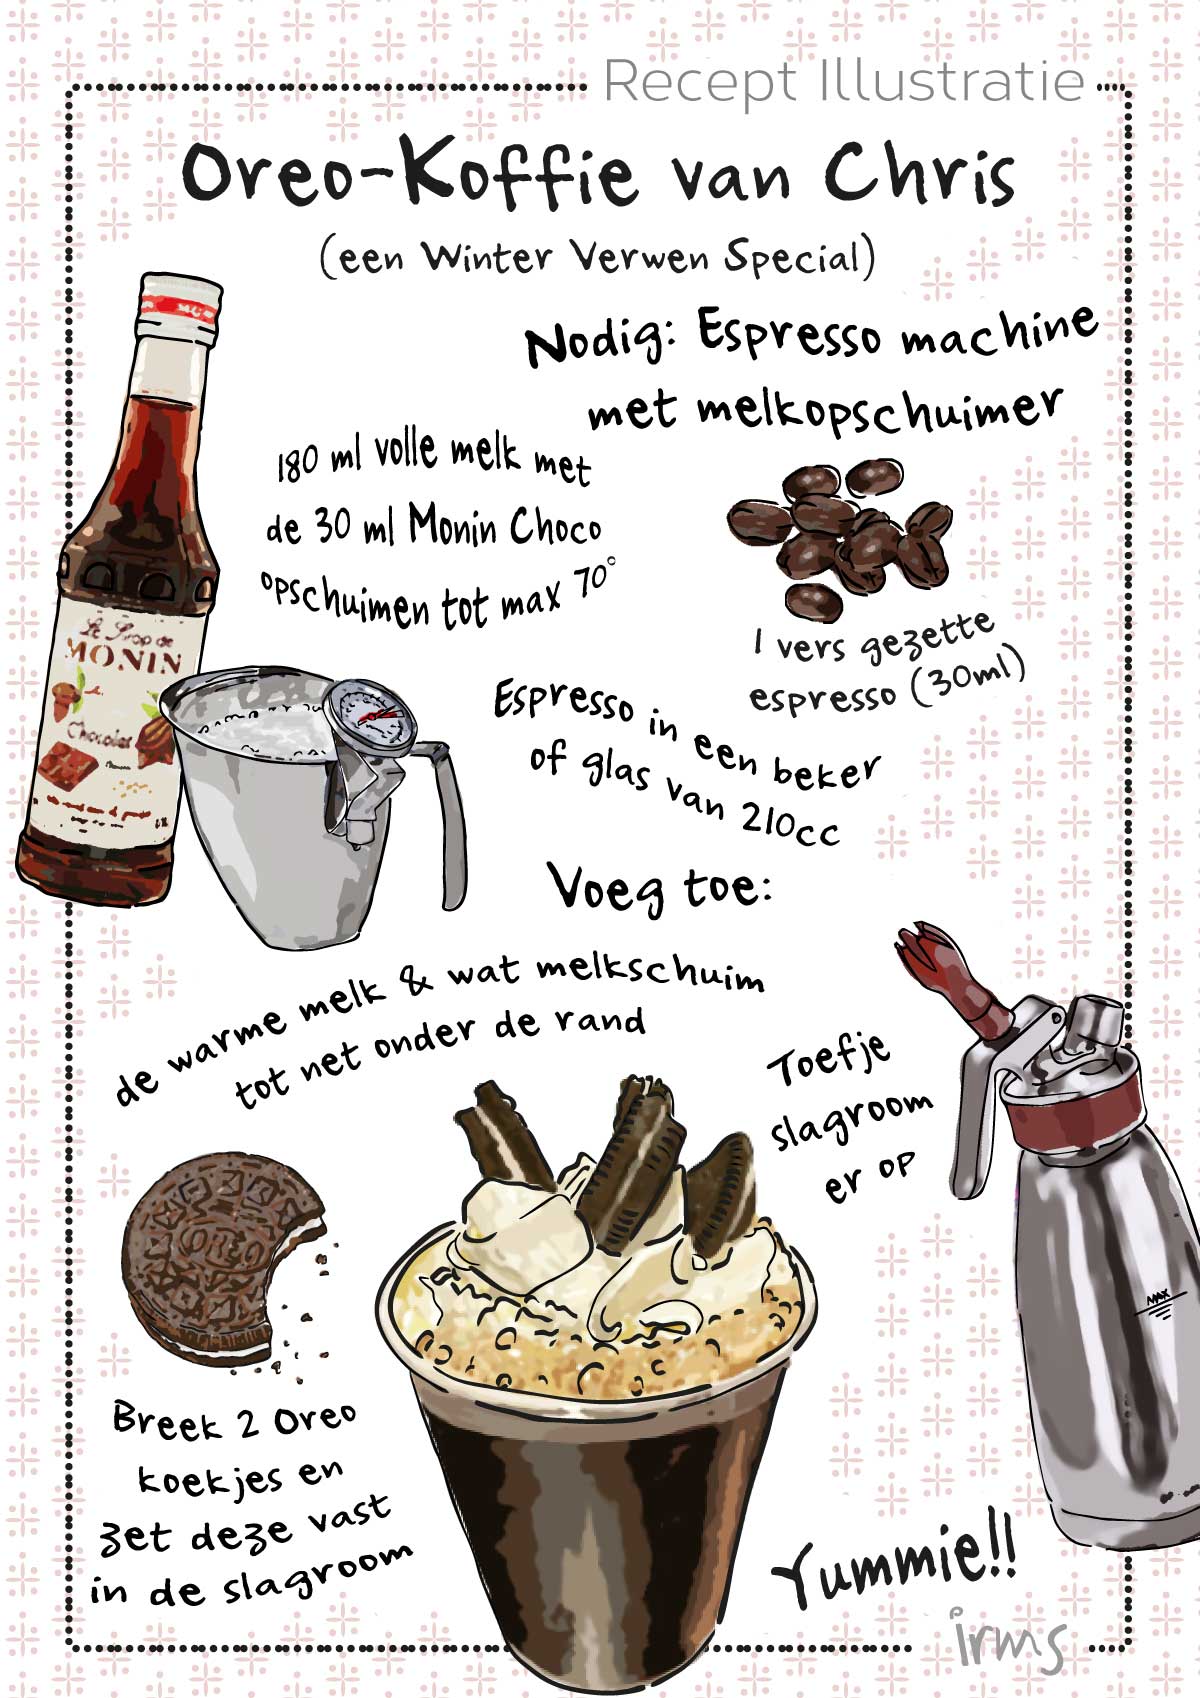 oreo-koffie-recept-illustratie-irms